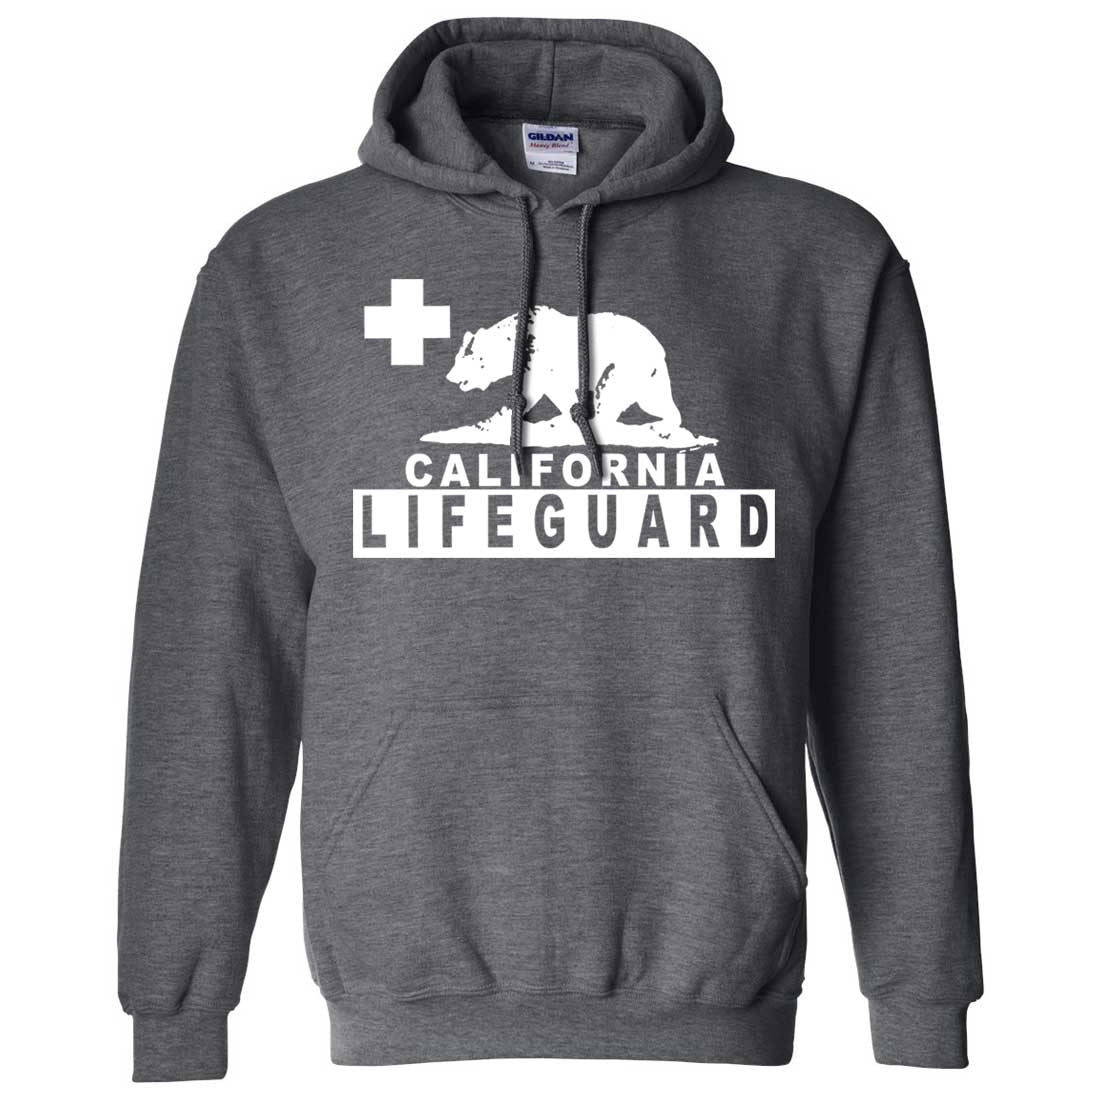 navy blue lifeguard hoodie